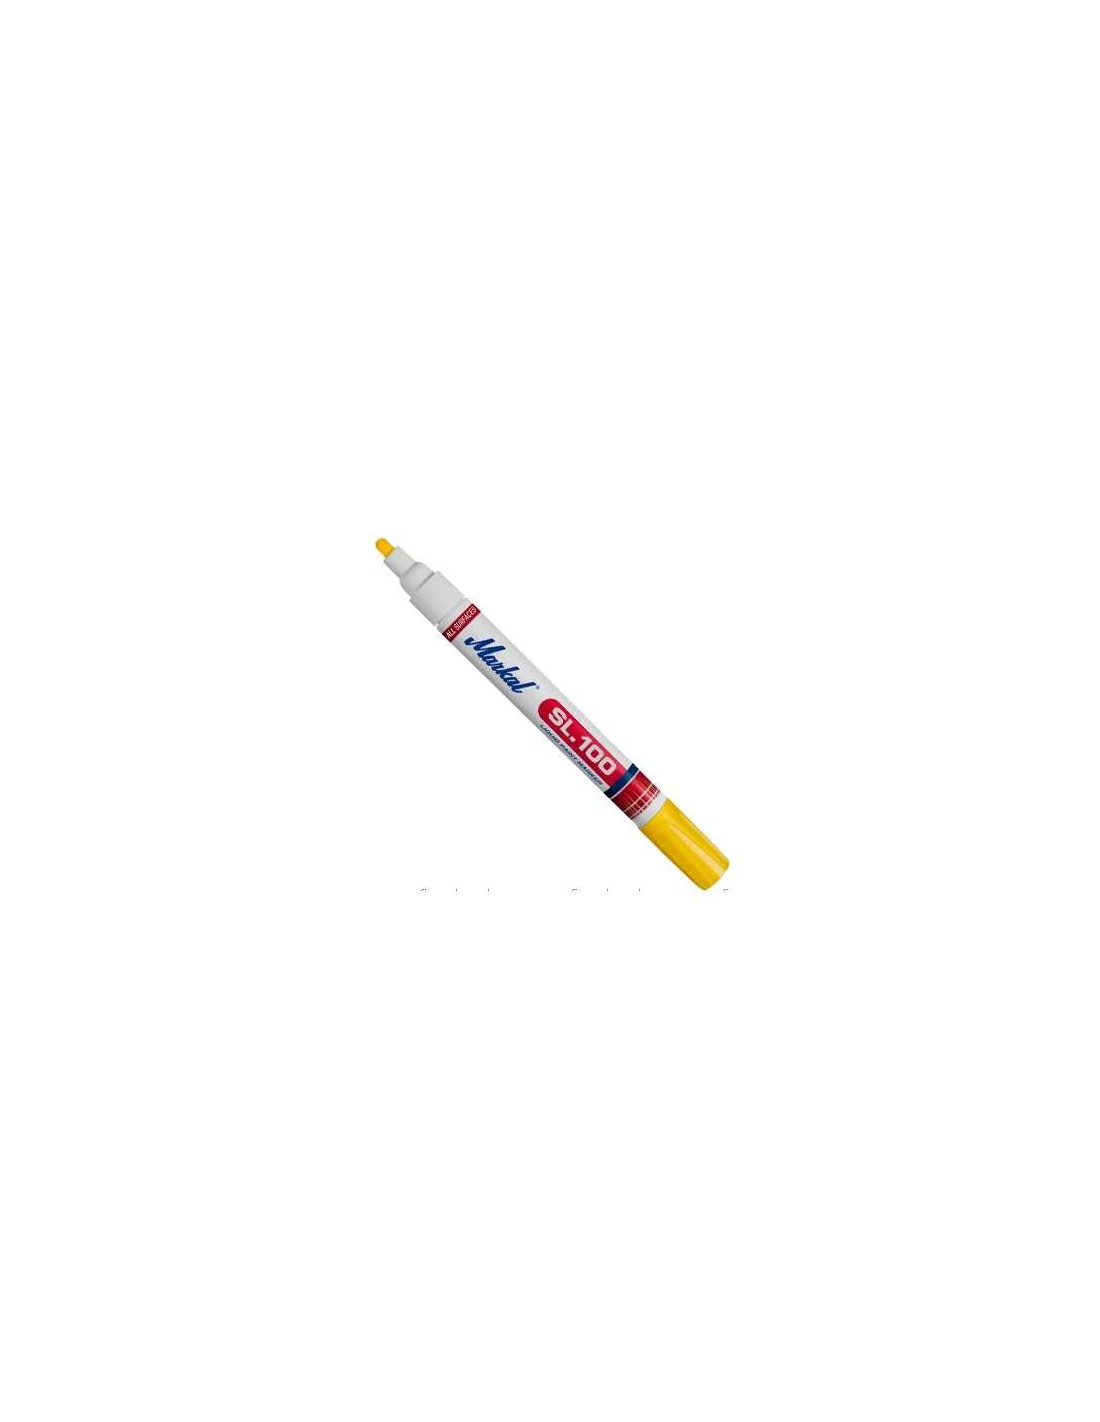 Markal SL.100 Liquid Paint Marker Pen | 3mm Bullet Tip | Xylene Free | 1 Pen